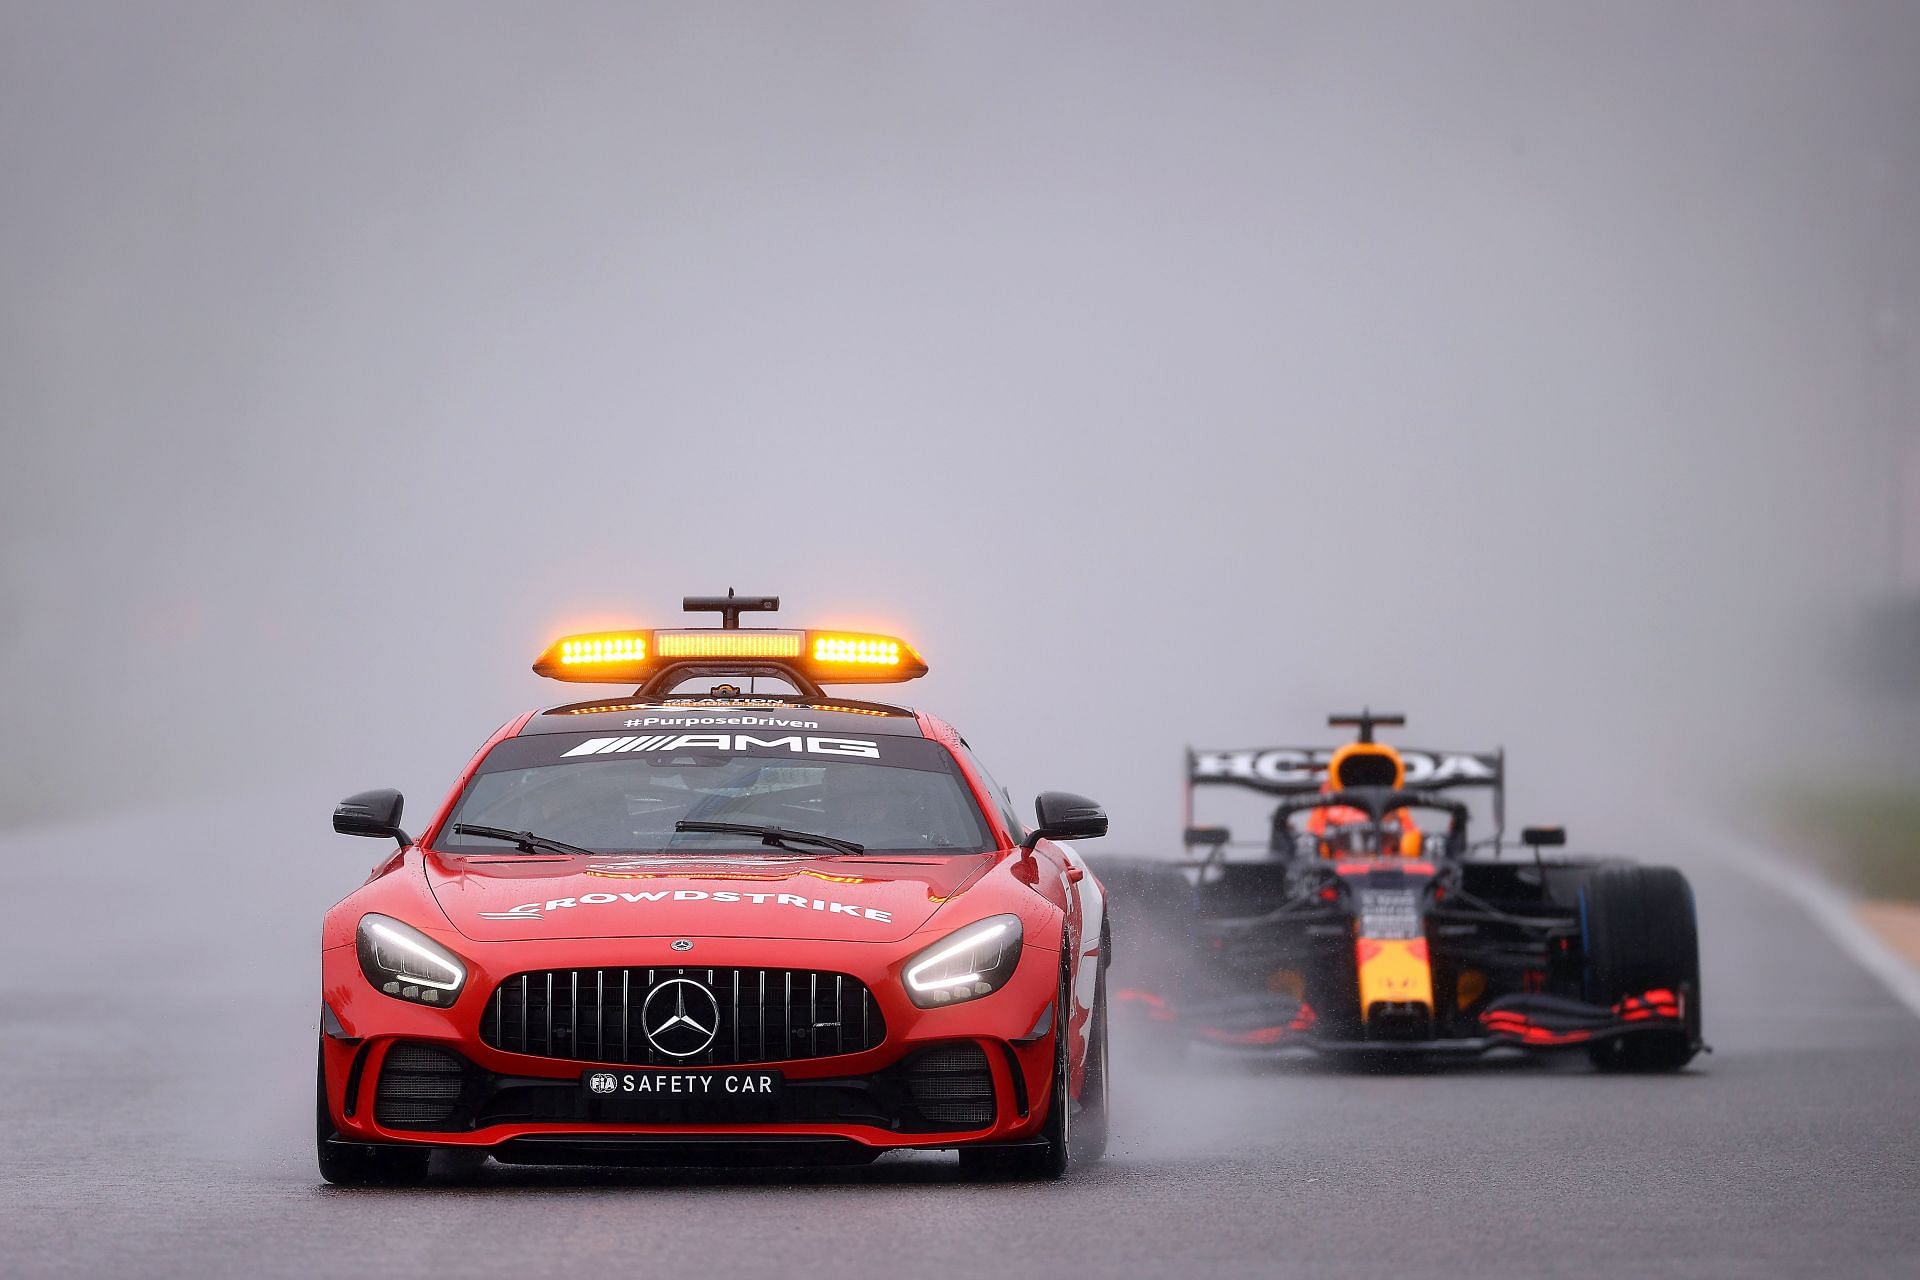 F1 Grand Prix of Belgium - FIA Safety Car